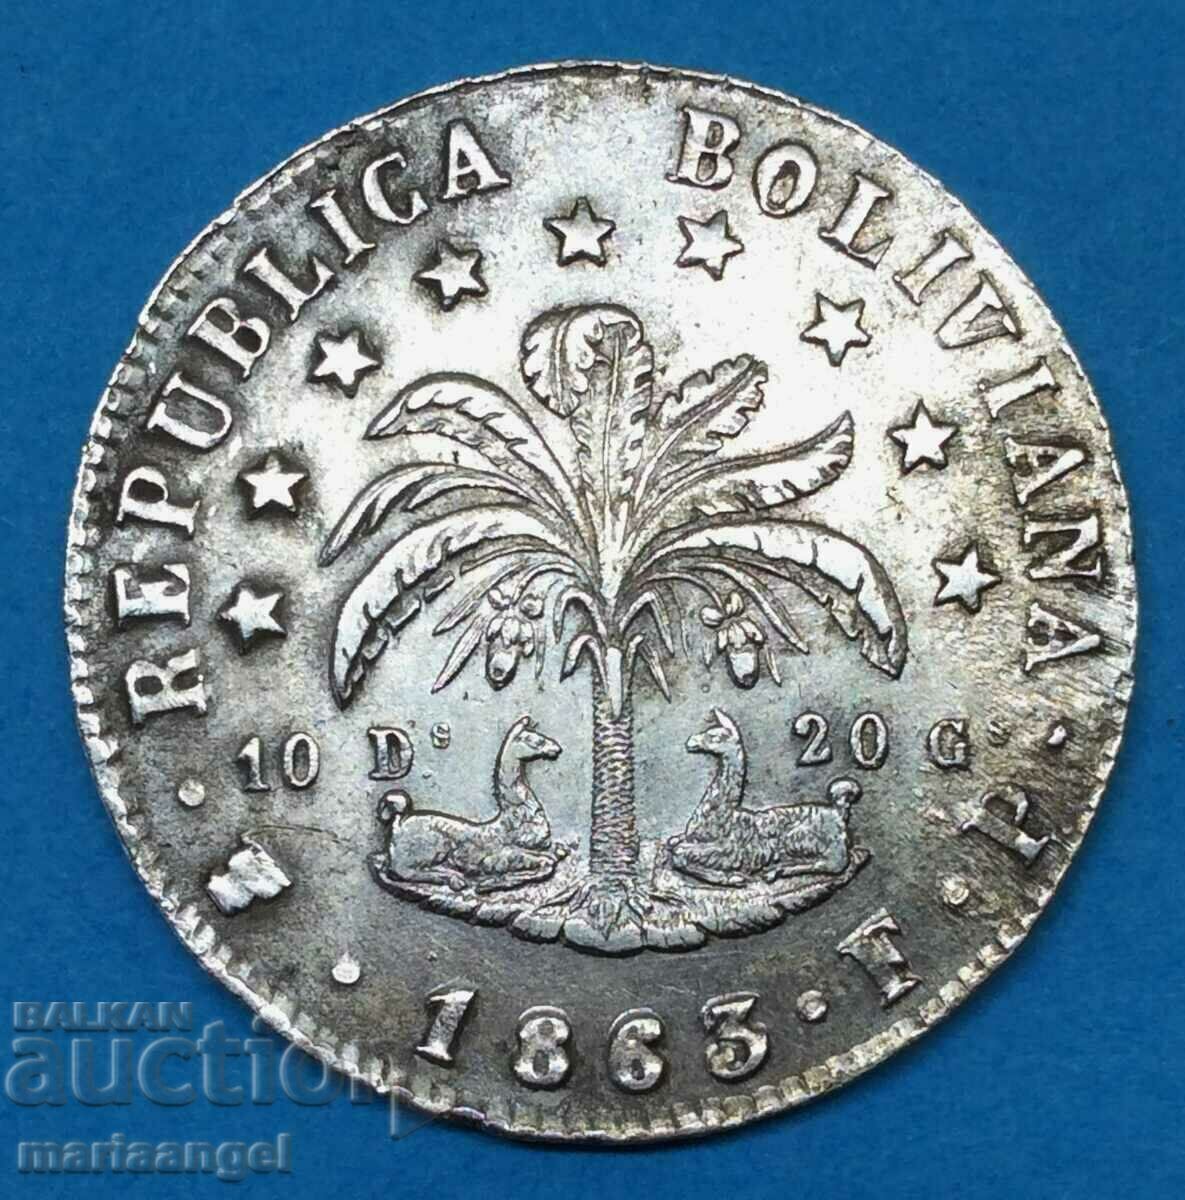 Bolivia 1863 8 sol Thaler 19.40g 36mm silver